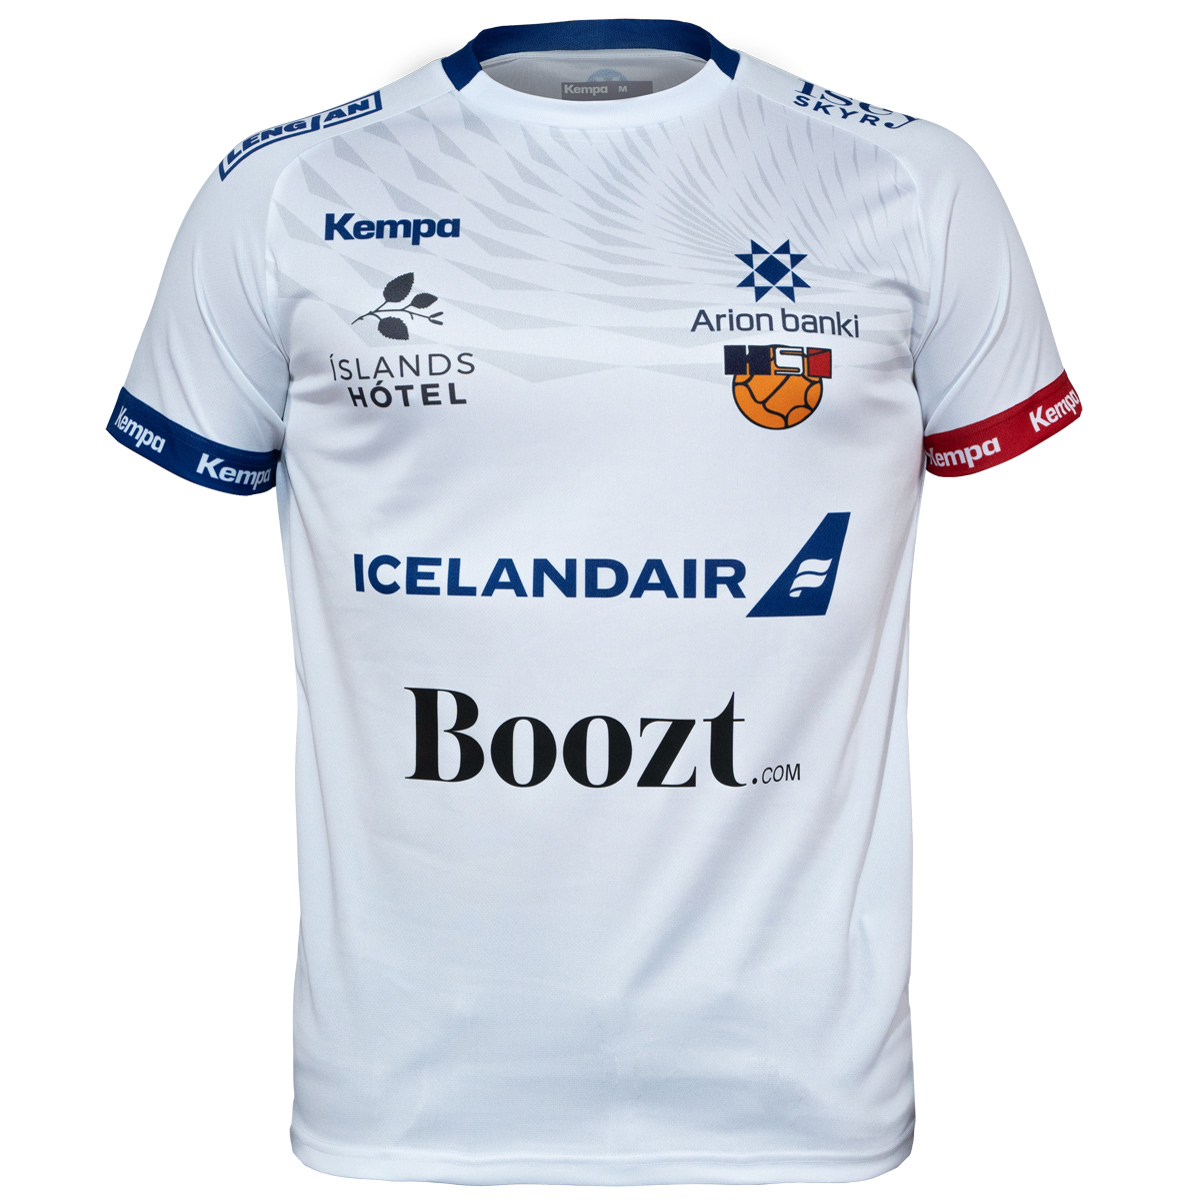 Offizielle Trikots des isländischen Handball-Nationalteams Kempa